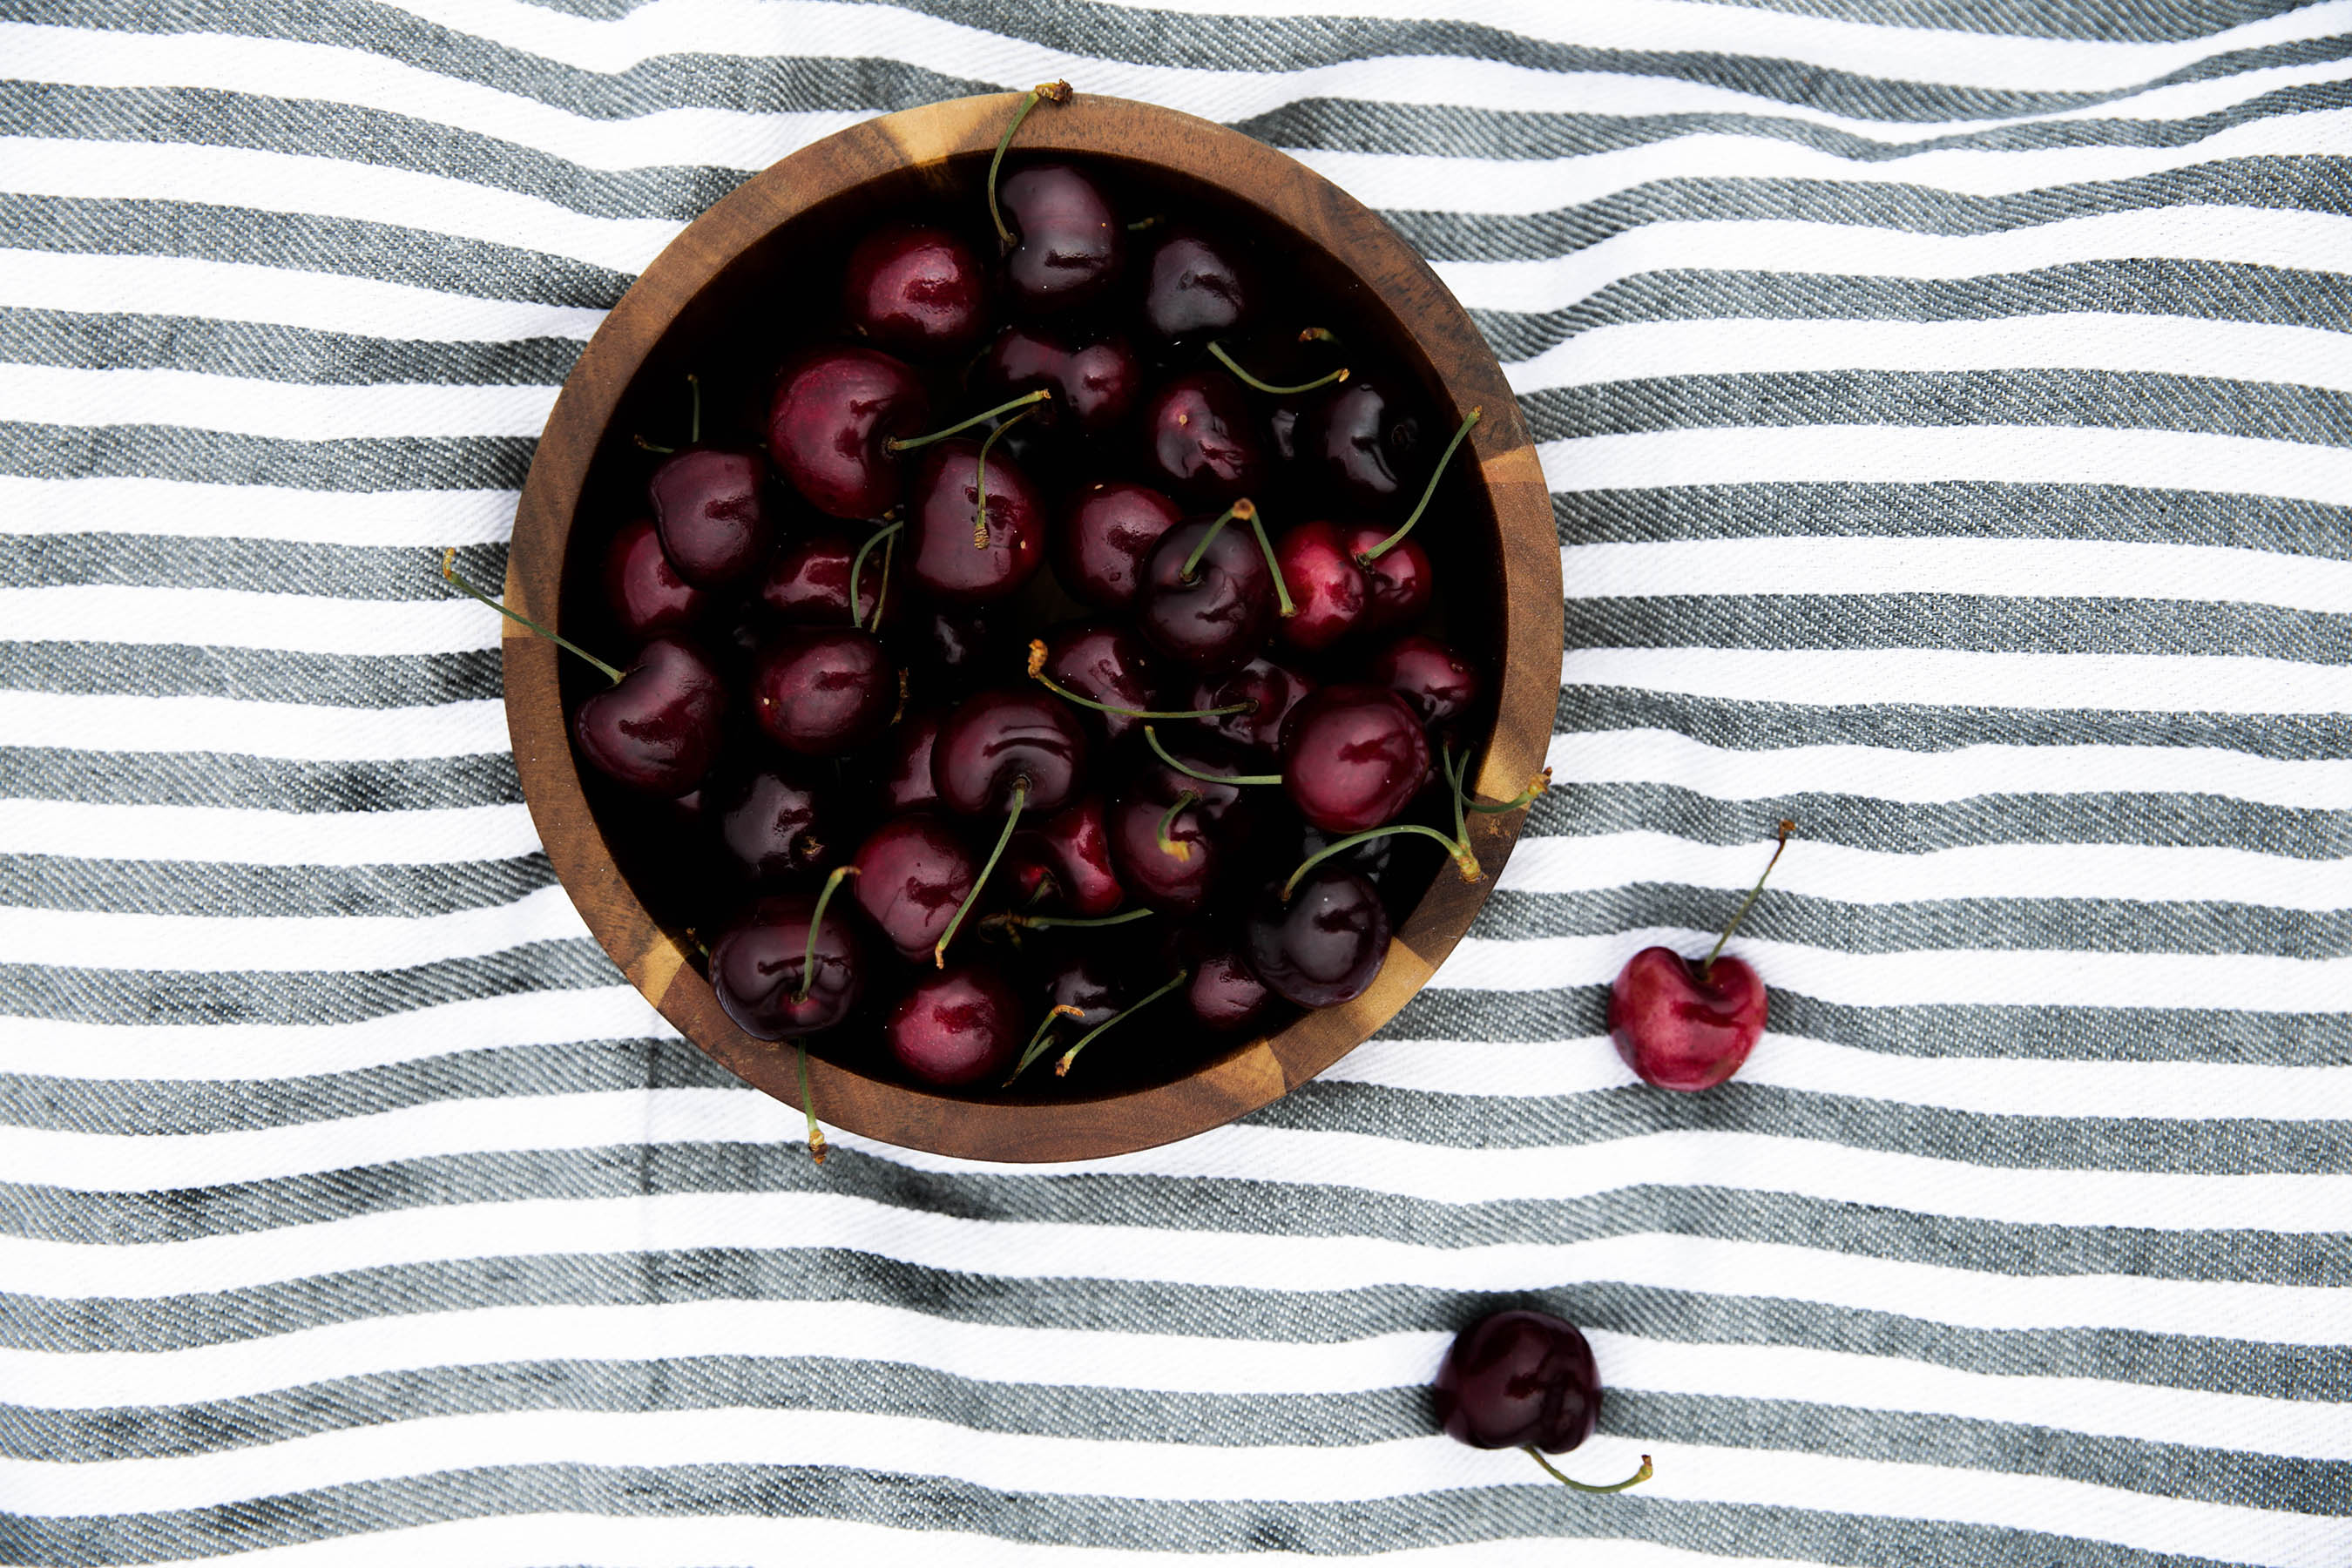 bowl of cherries on striped blanket for summer picnic